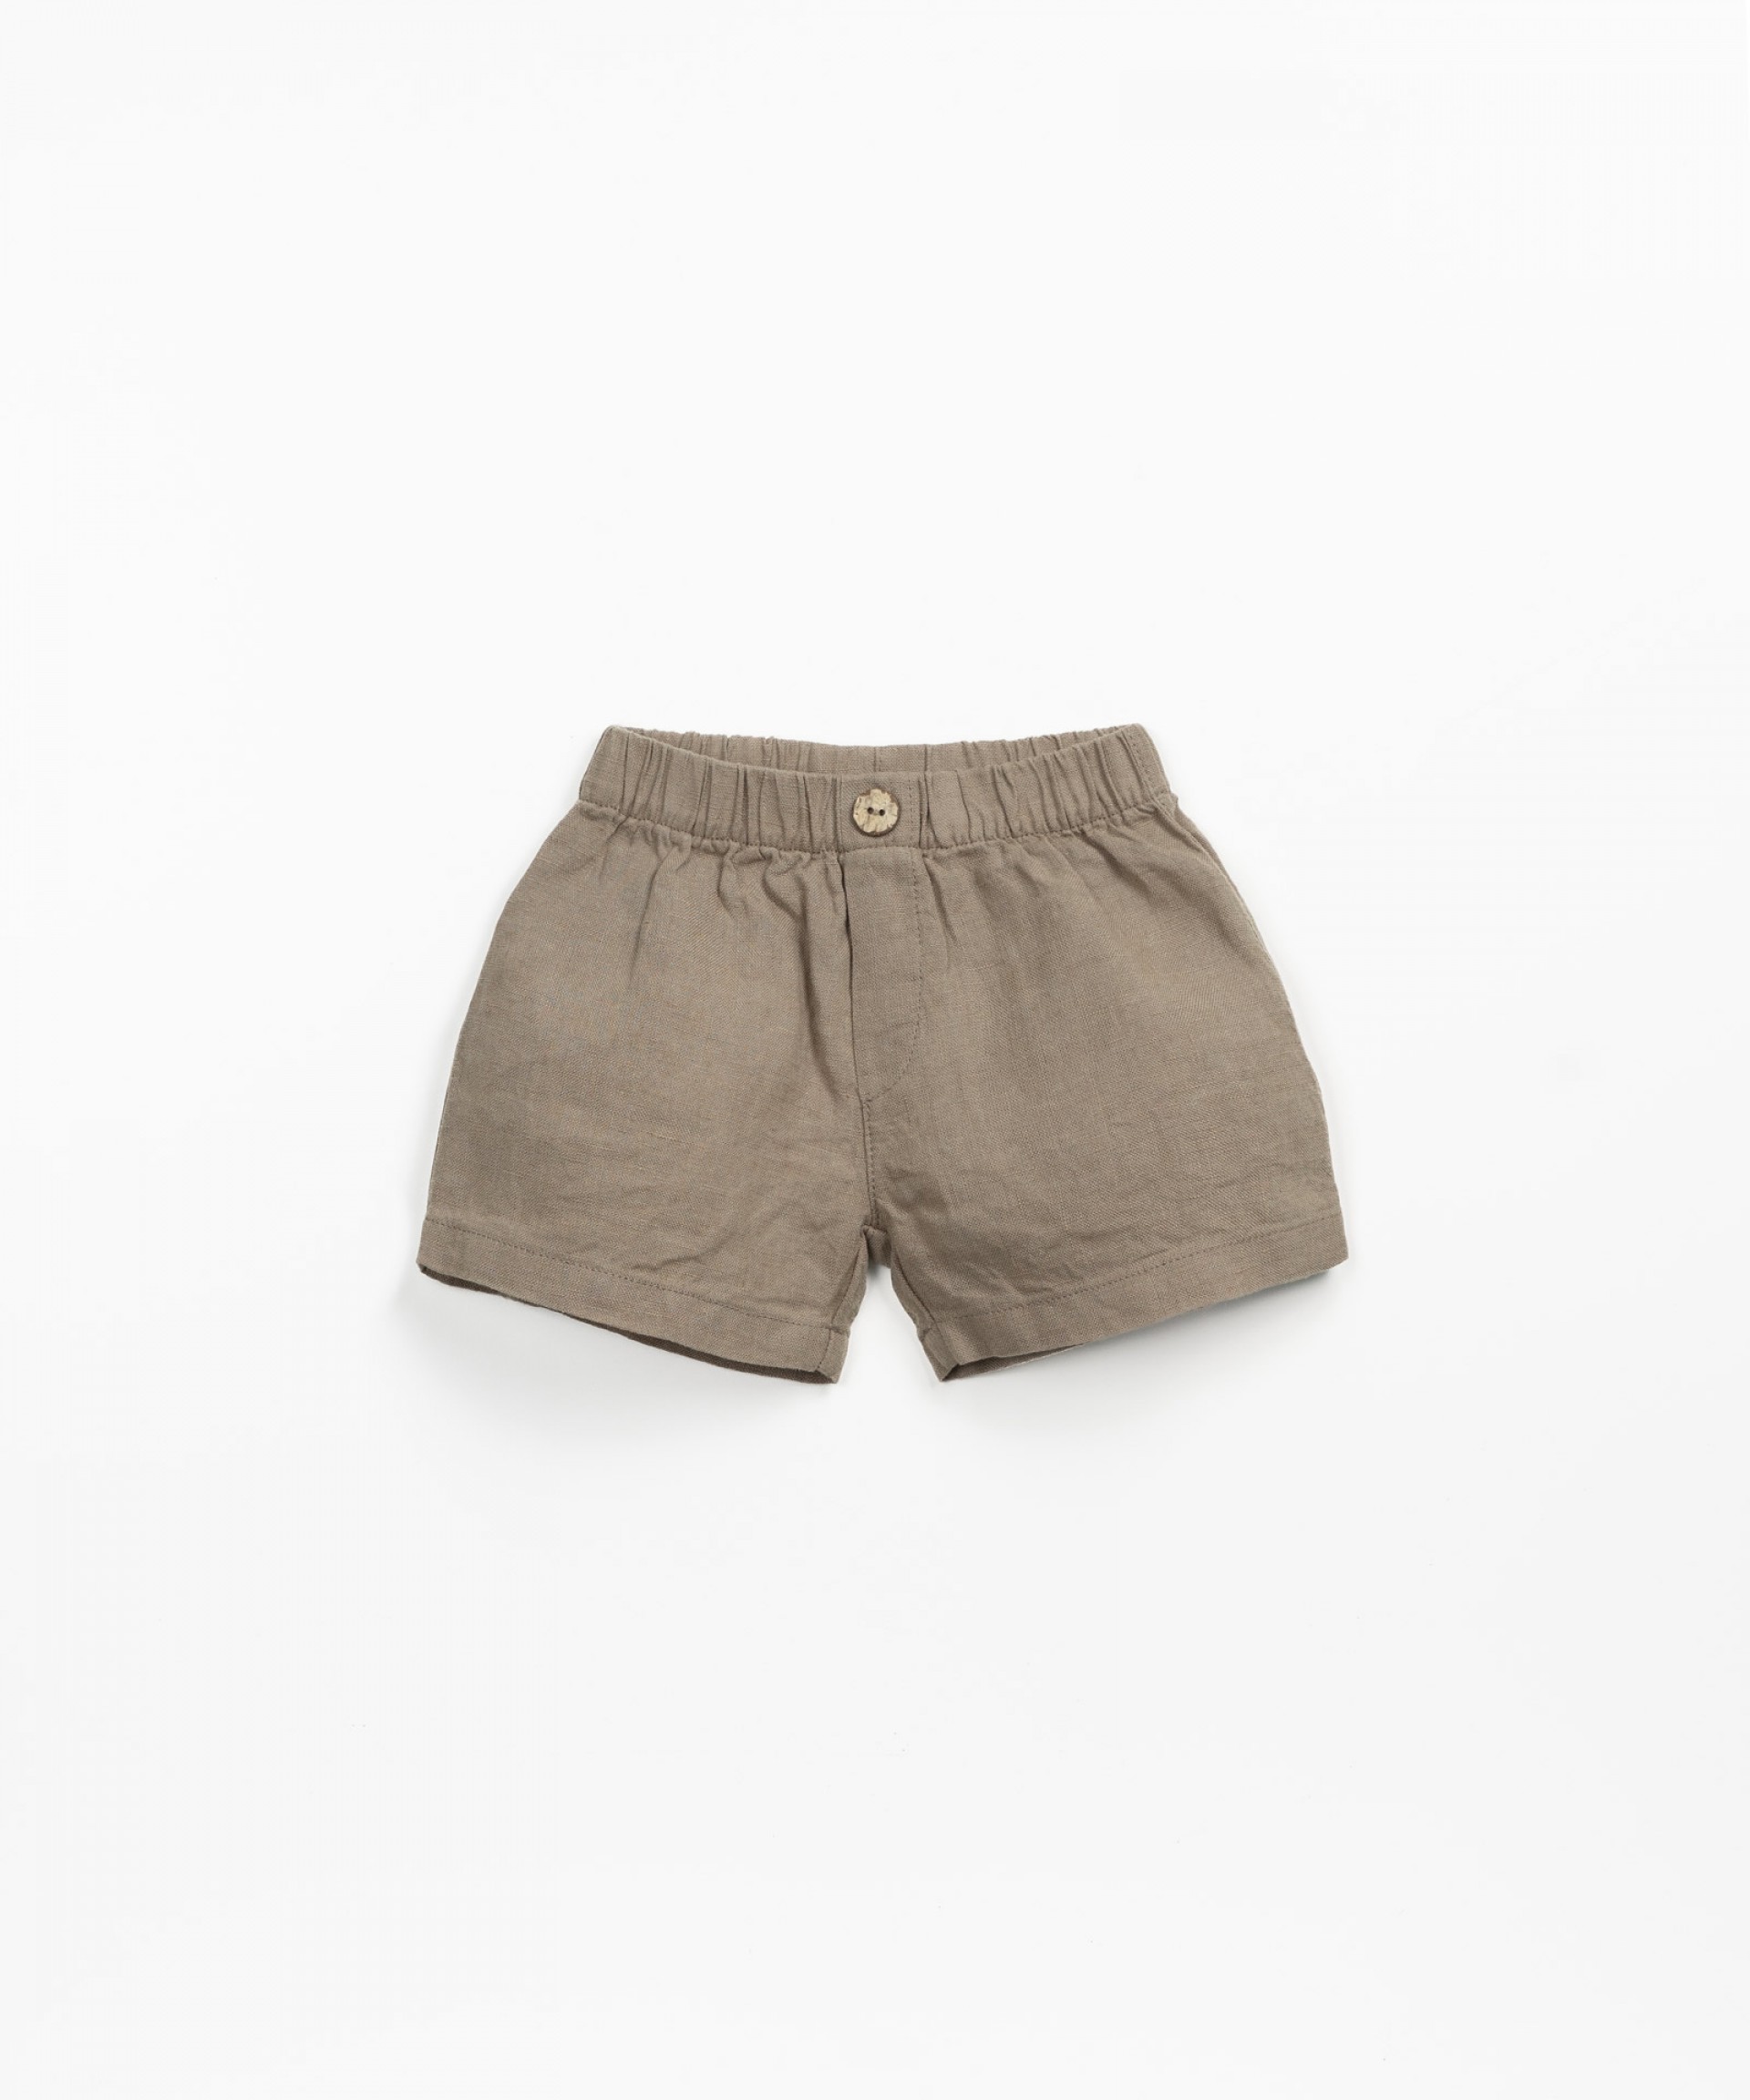 Linen shorts with rear pocket | Textile Art